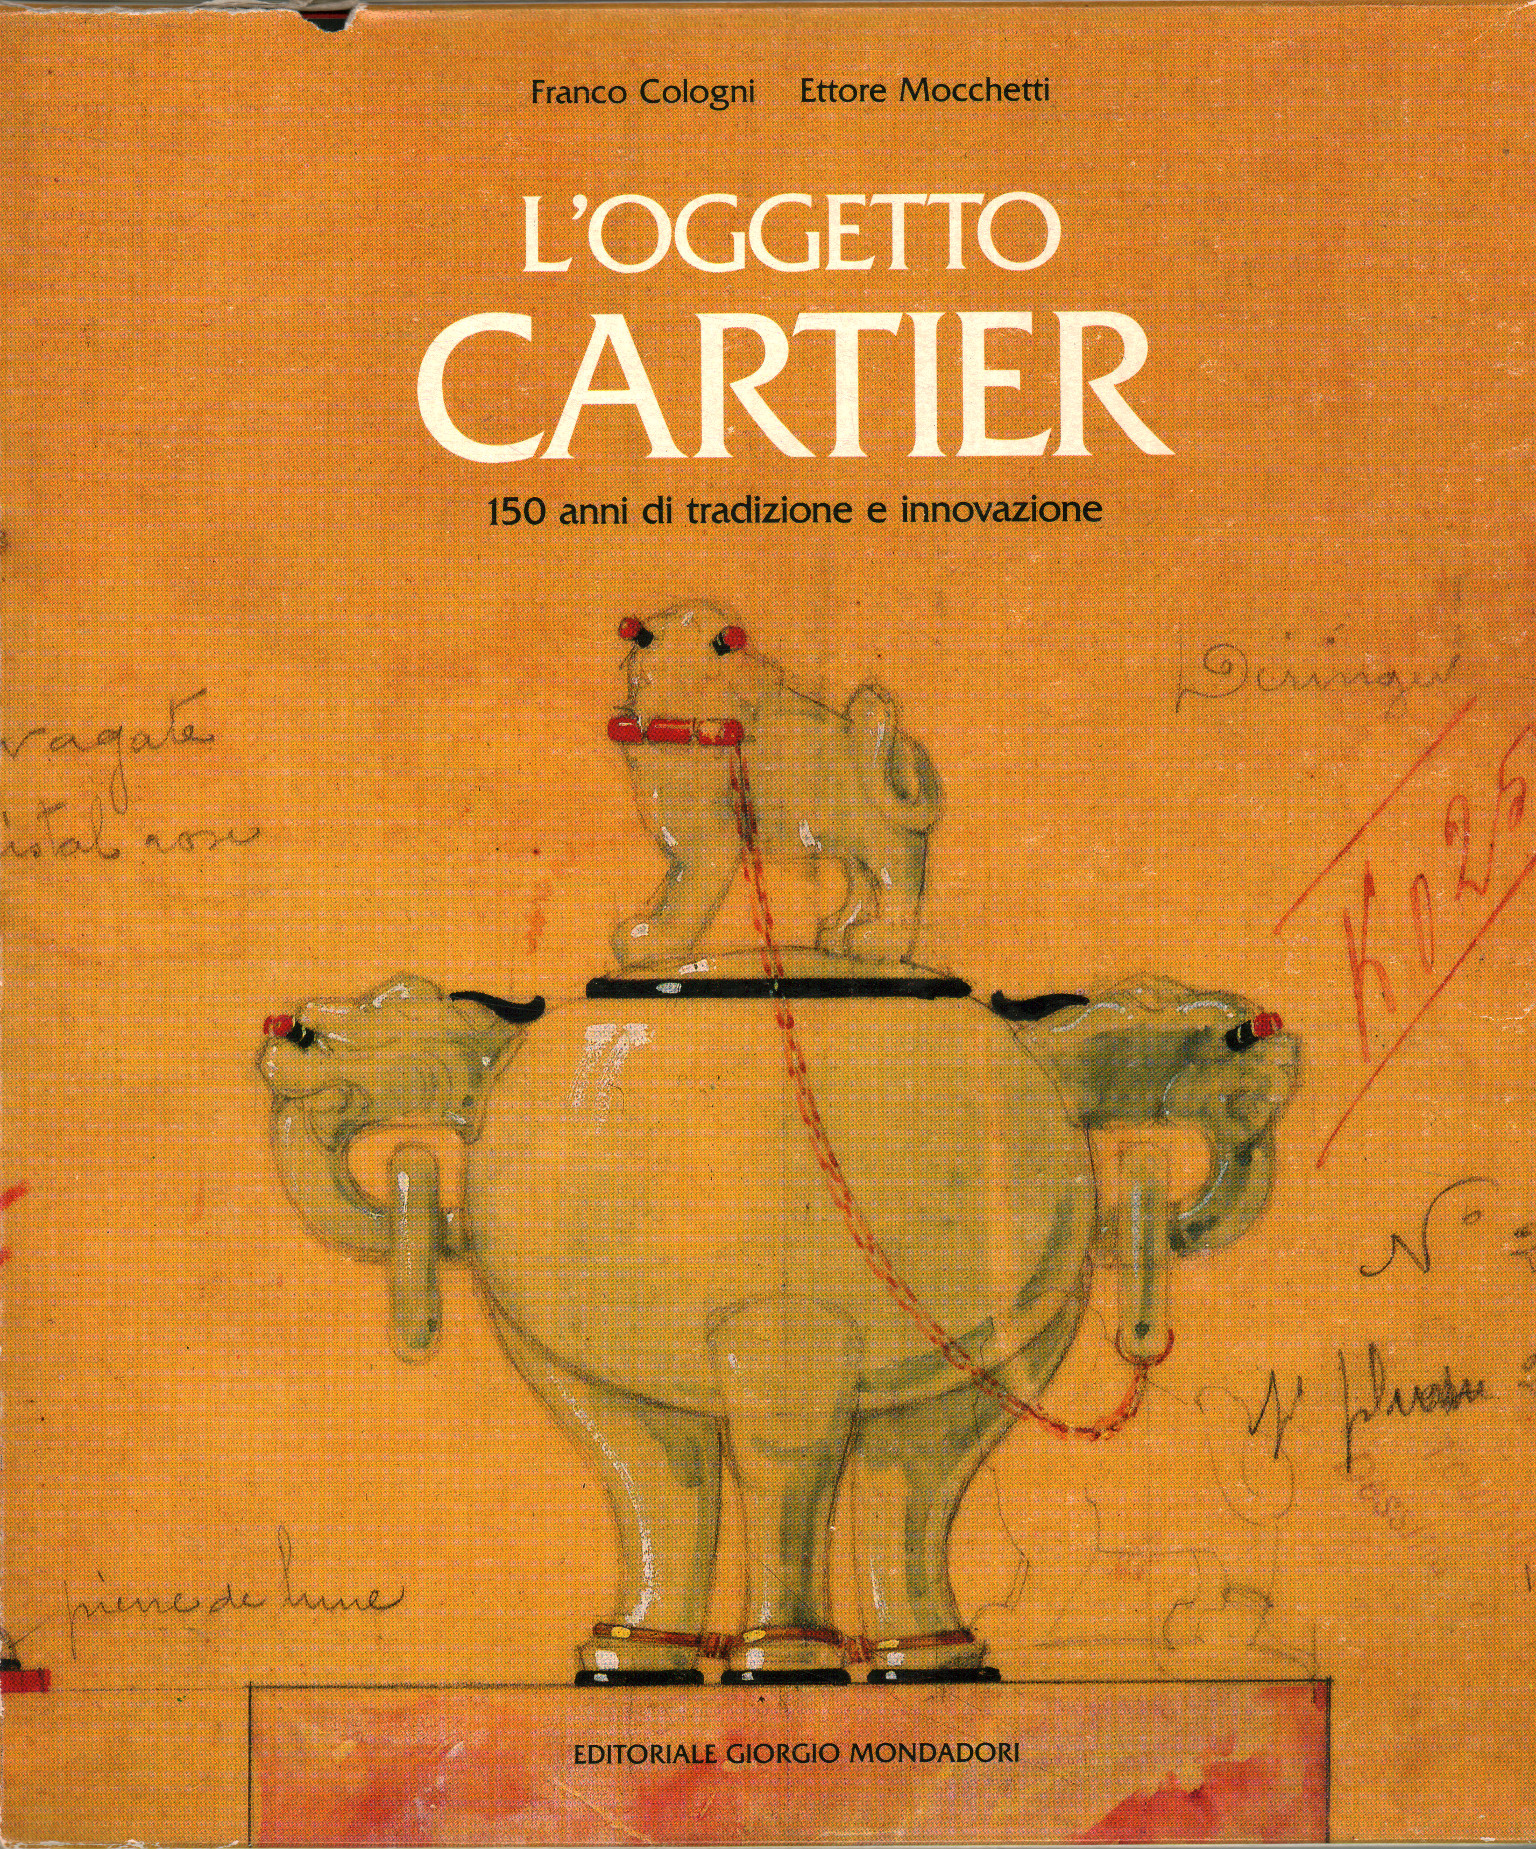 Das Cartier-Objekt